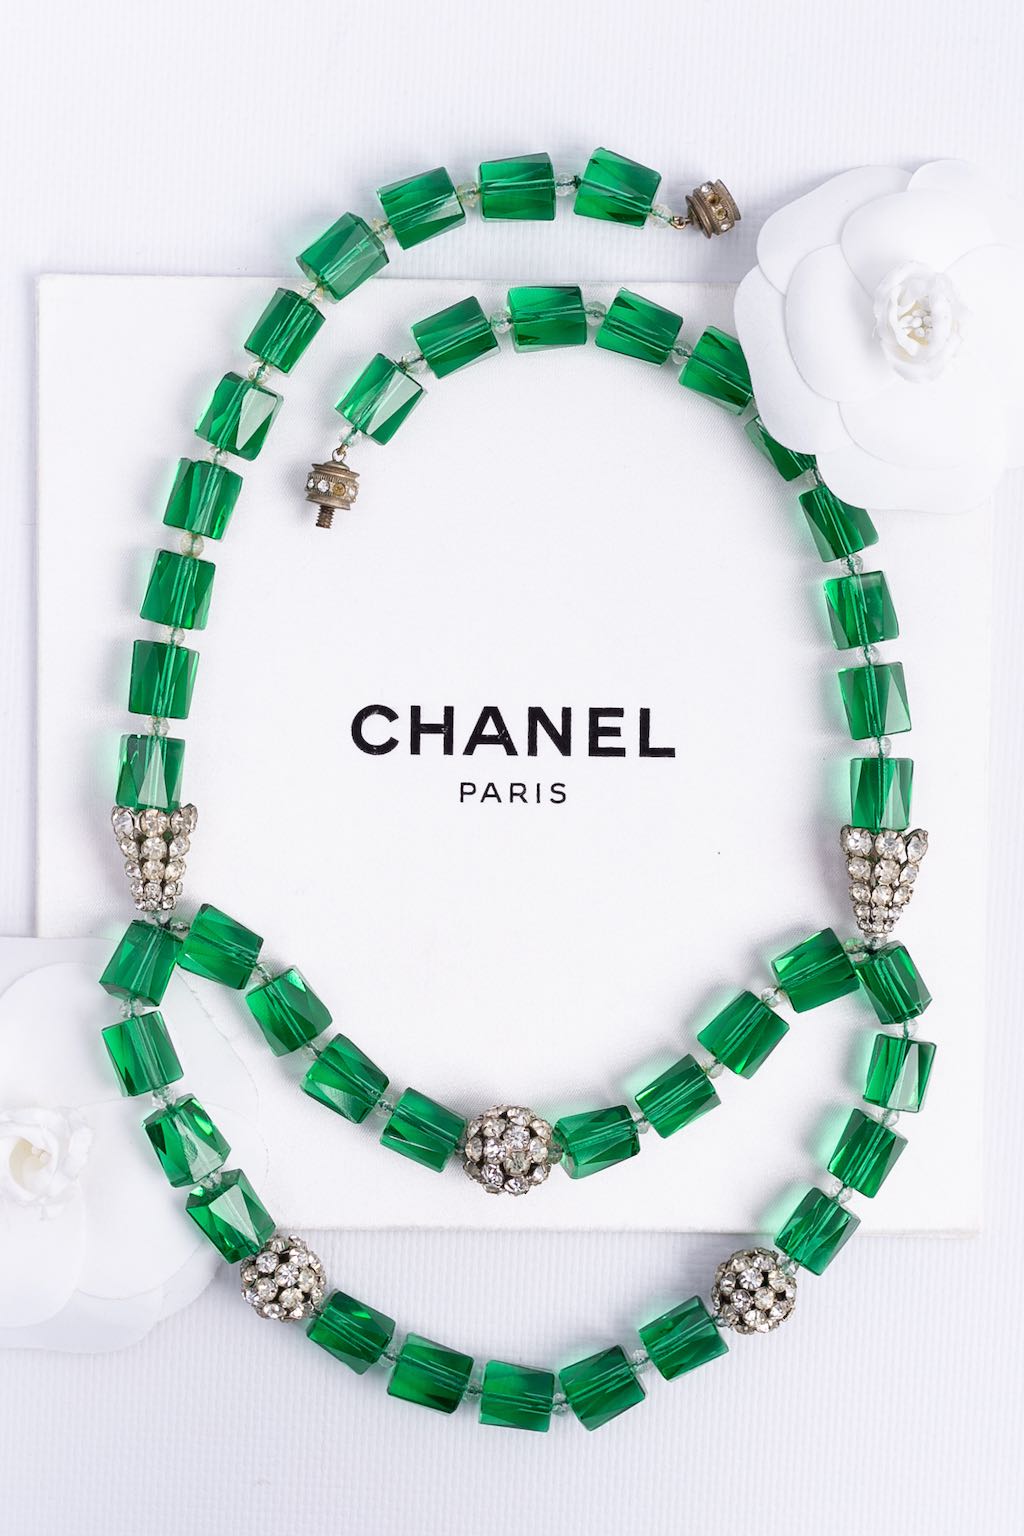 Collier perles de verre et strass Chanel (Non signé)